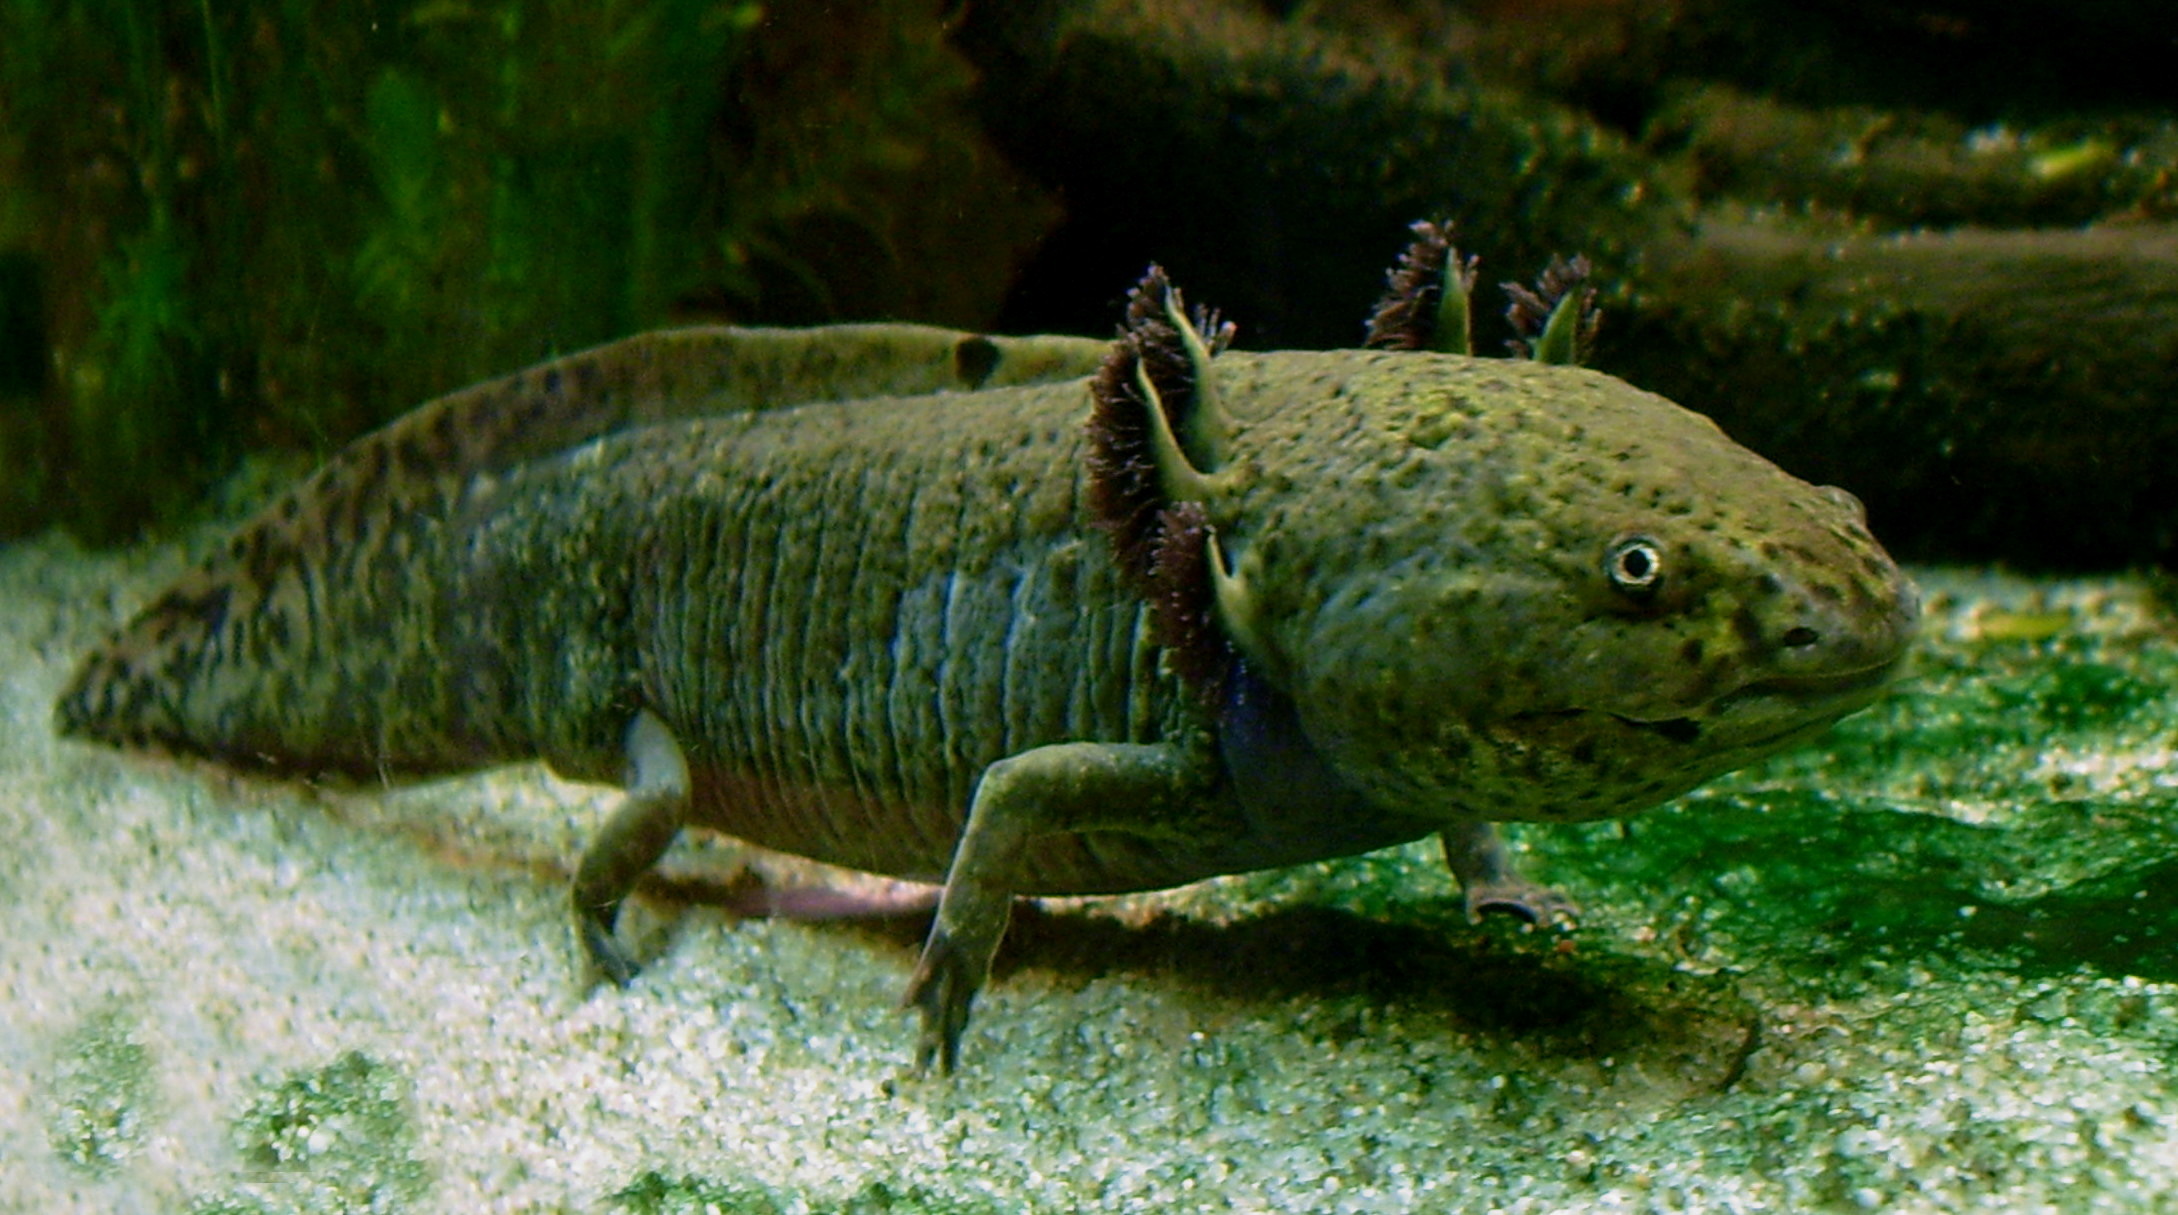 Science News Roundup: New museum in Mexico spotlights endangered axolotl salamander